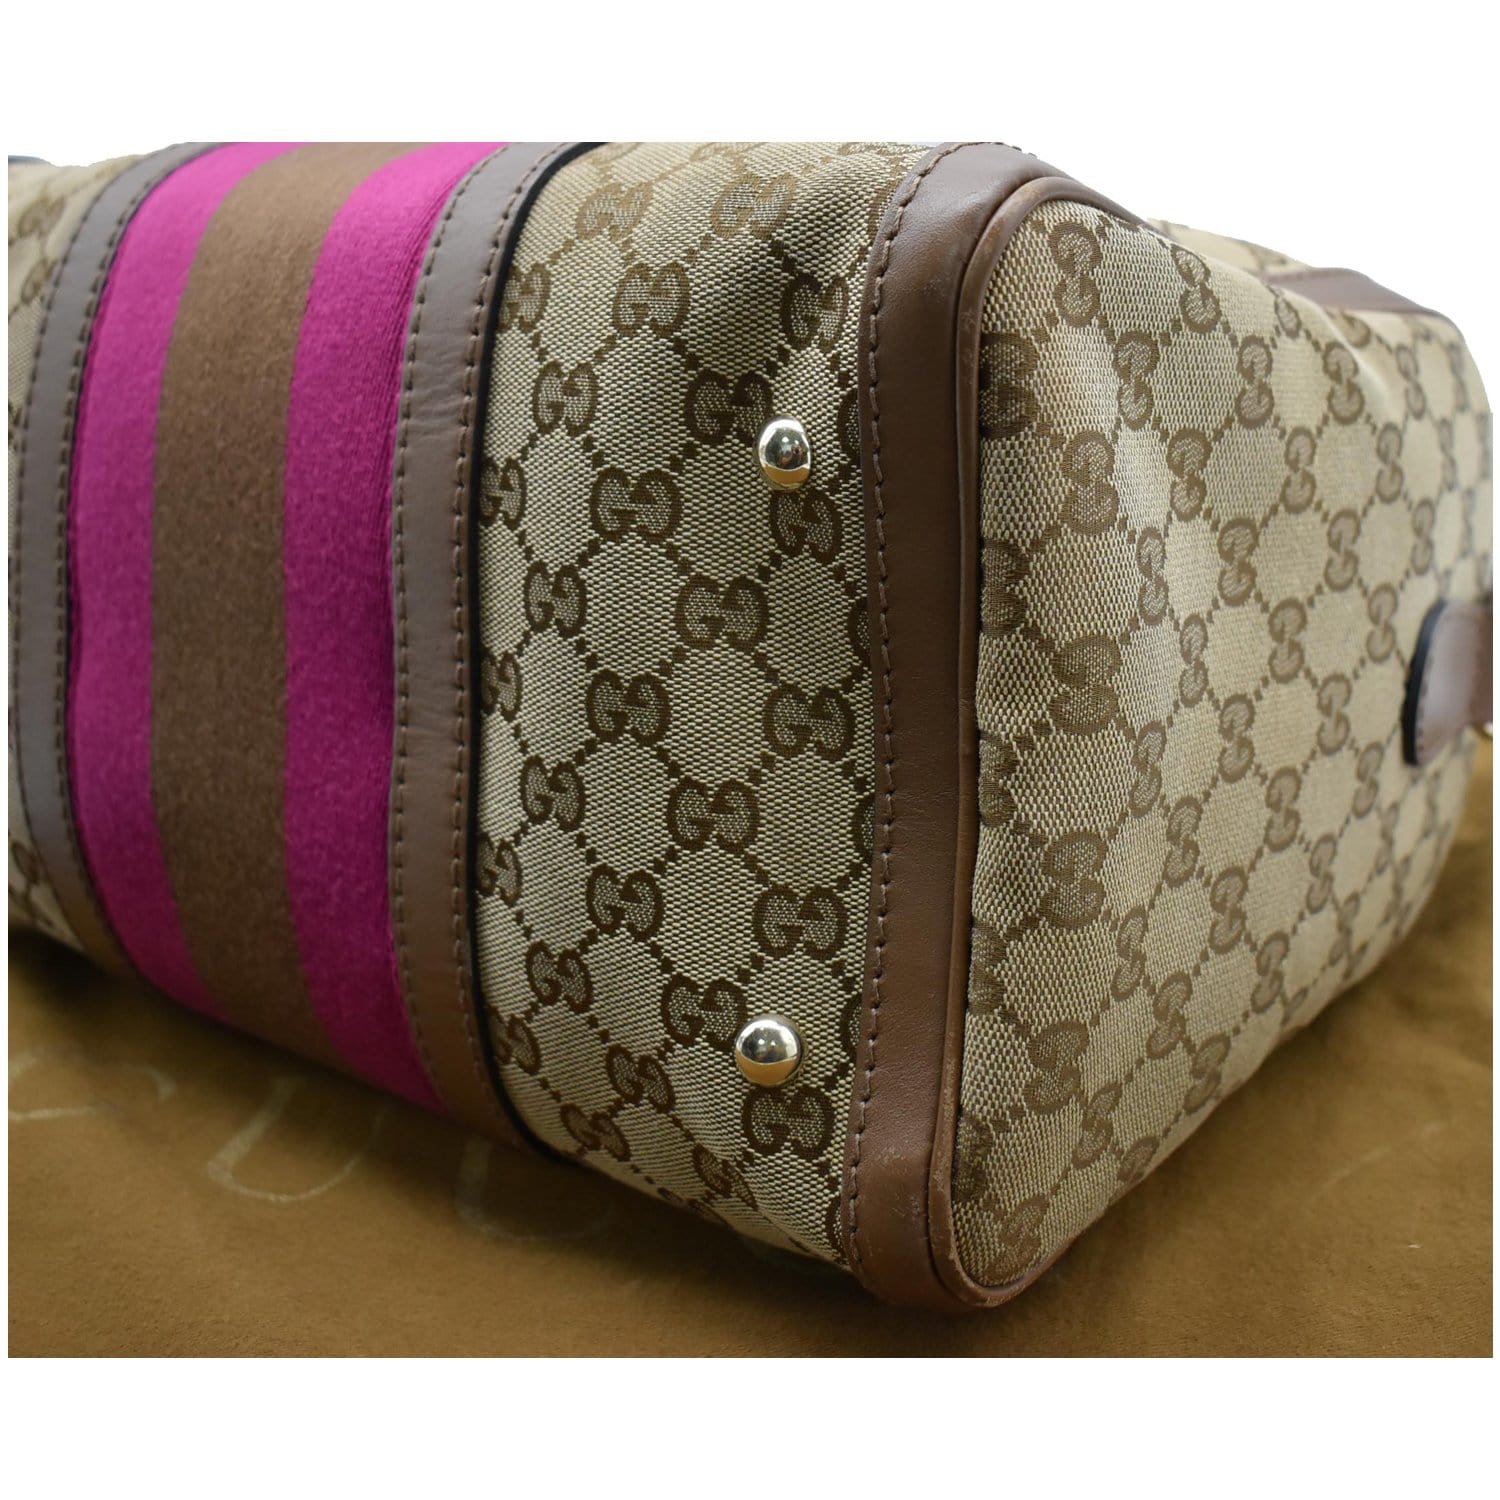 Gucci Beige/Brown GG Supreme Canvas and Patent Leather Boston Bag